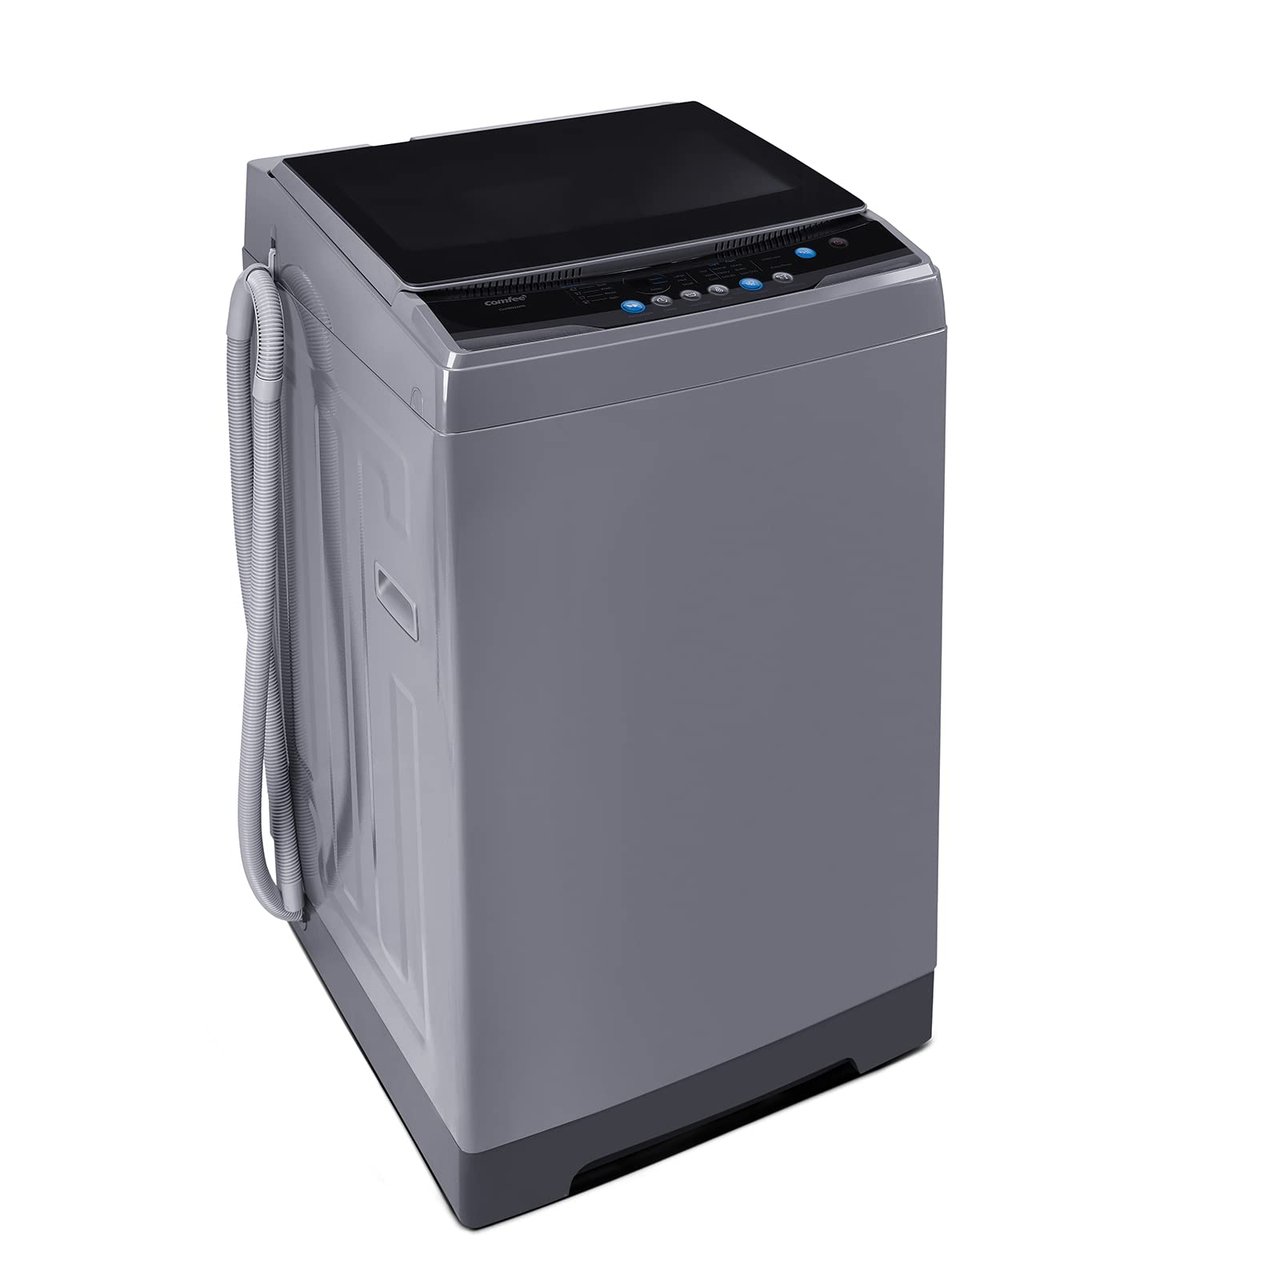 1 COMFEE’ 1.6 Cu.ft Portable Washing Machine